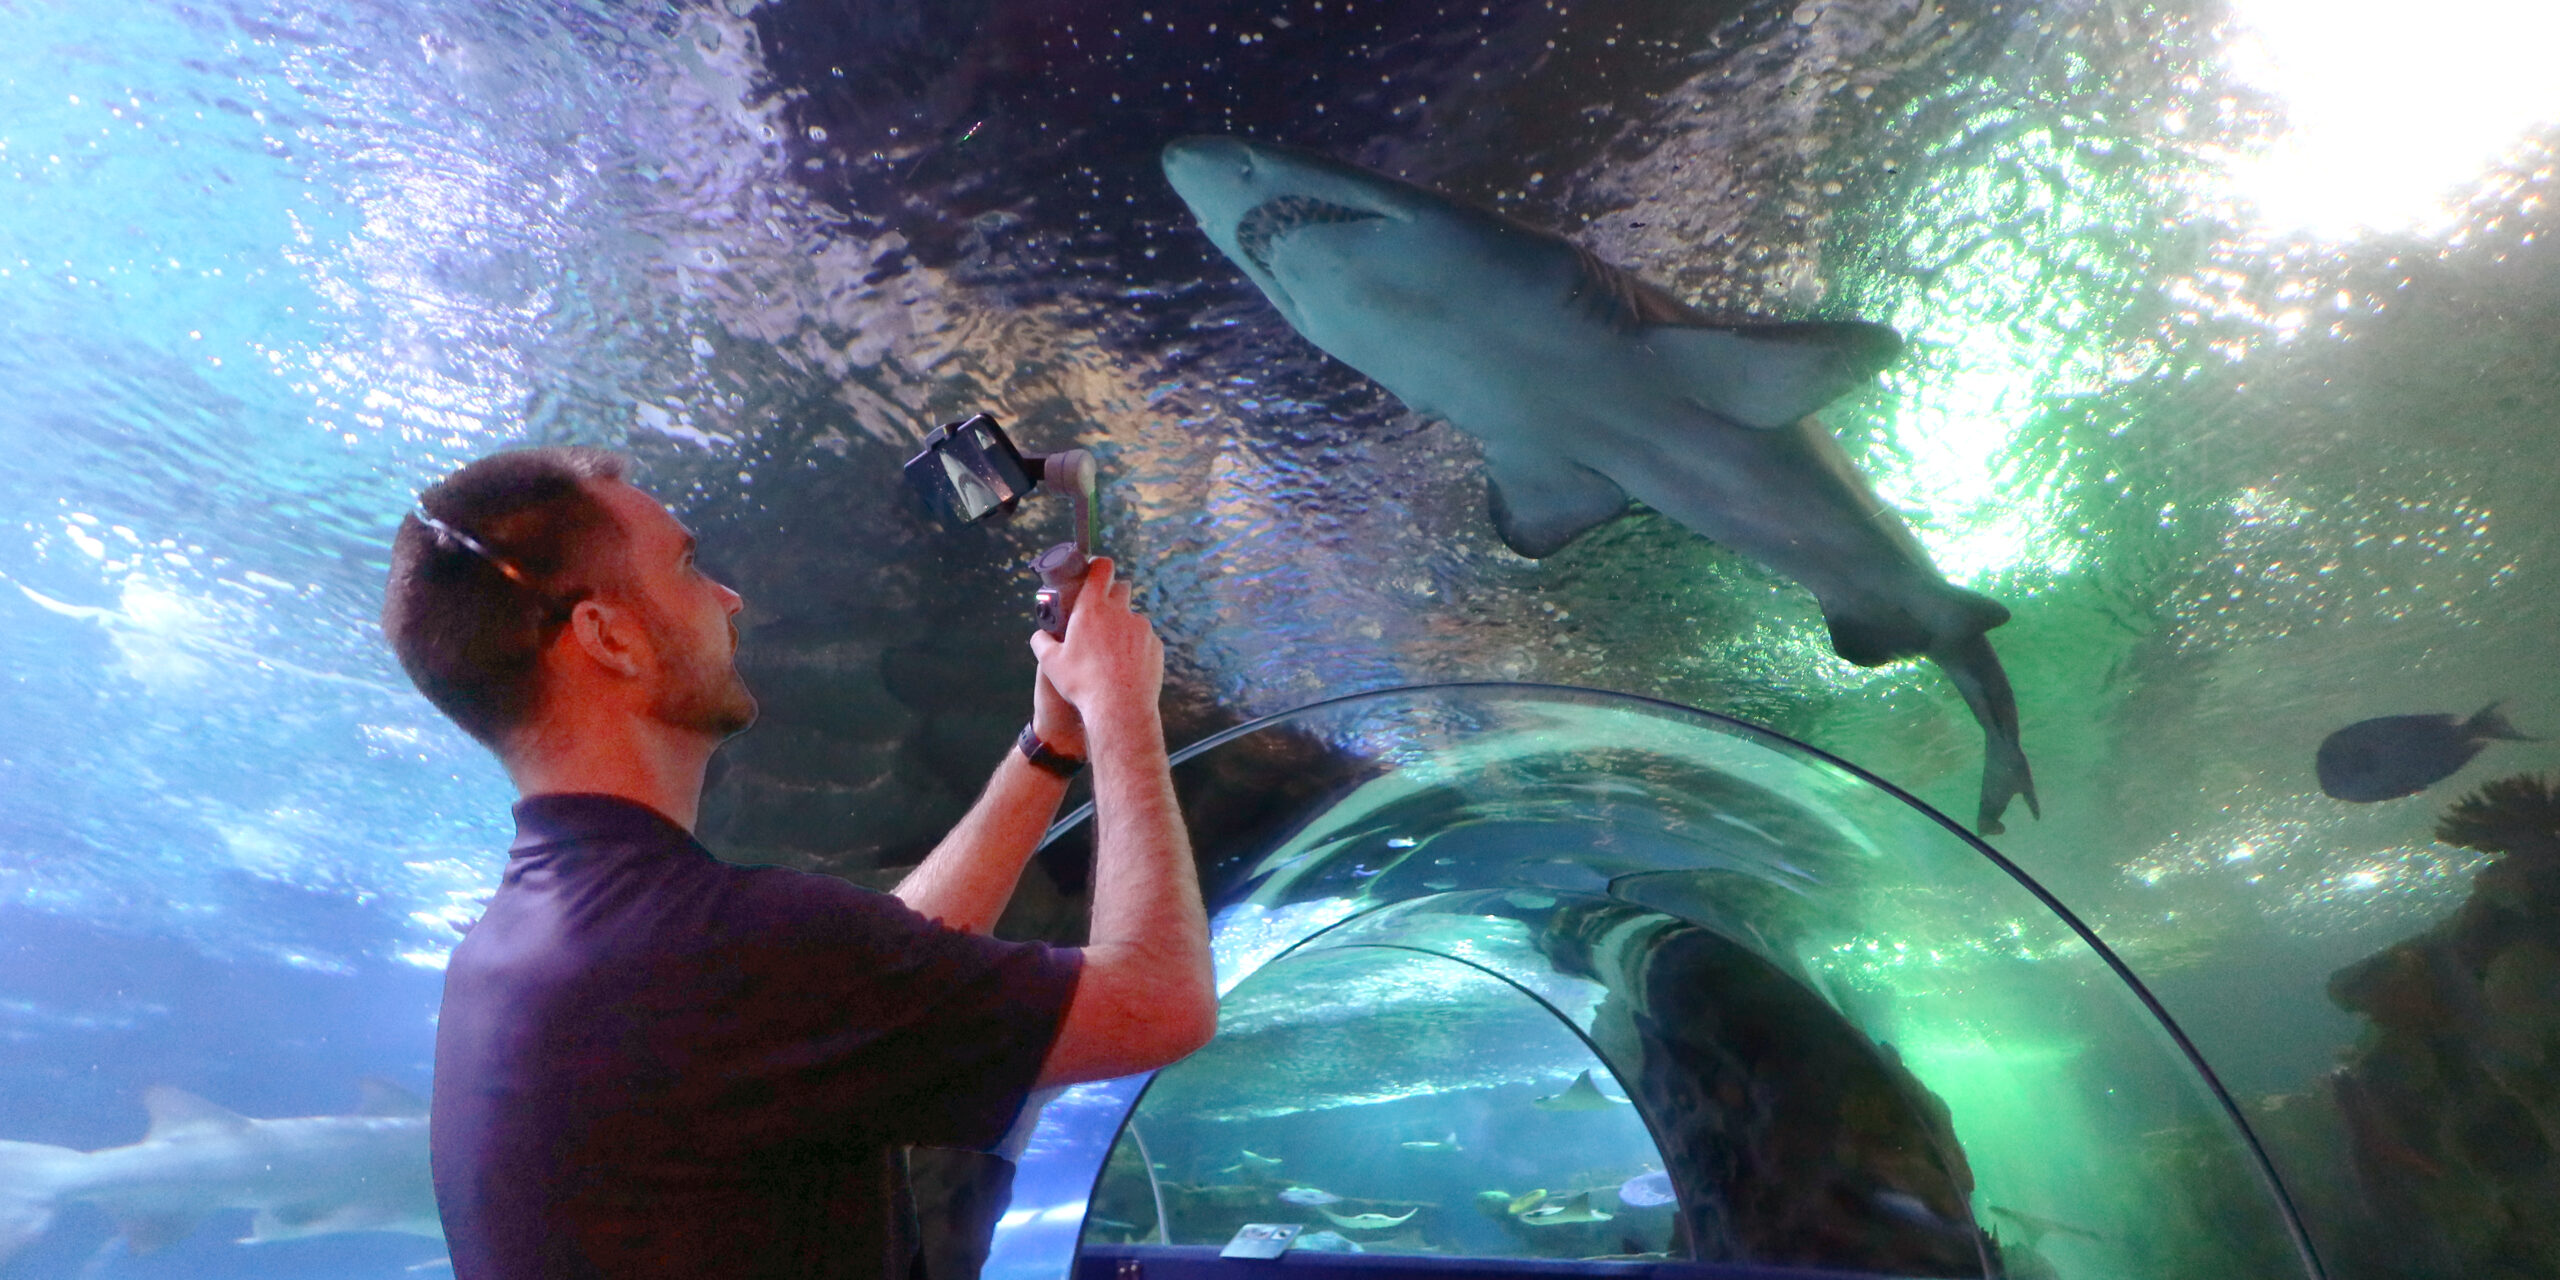 Greater Cleveland Aquarium educator pointing camera at sandtiger shark.